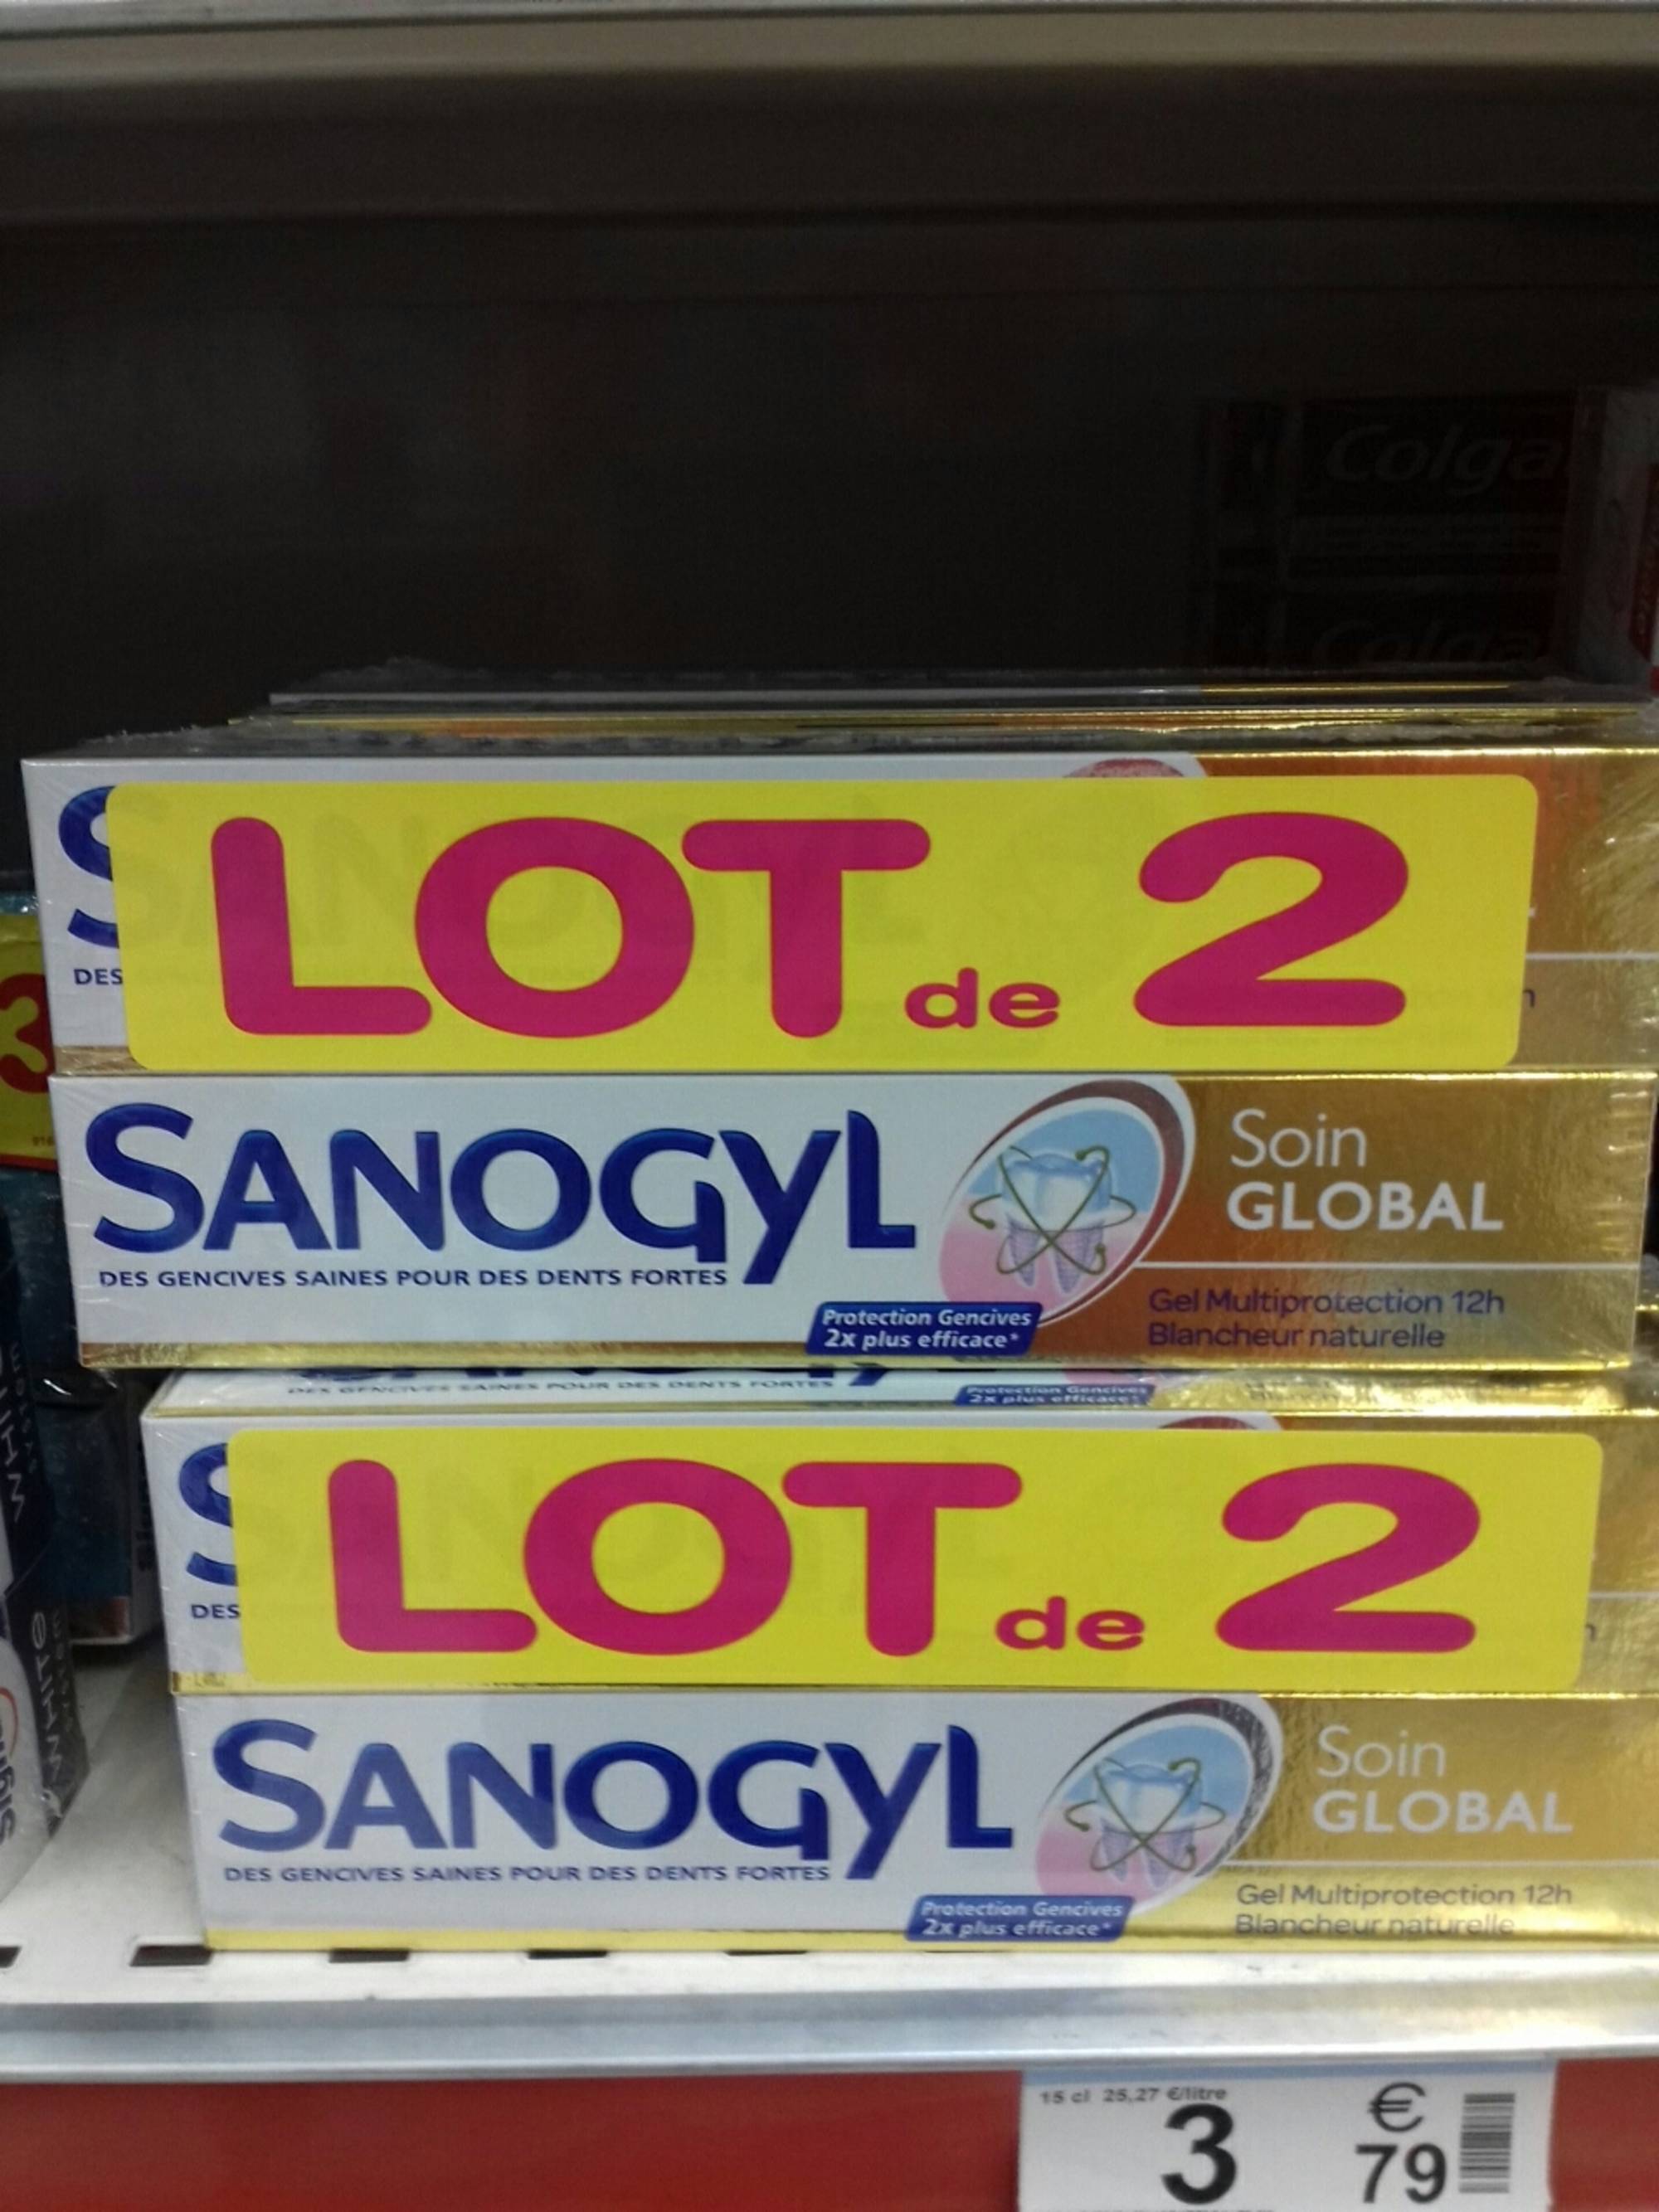 SANOGYL - Soin global - Gel multiprotection 12h